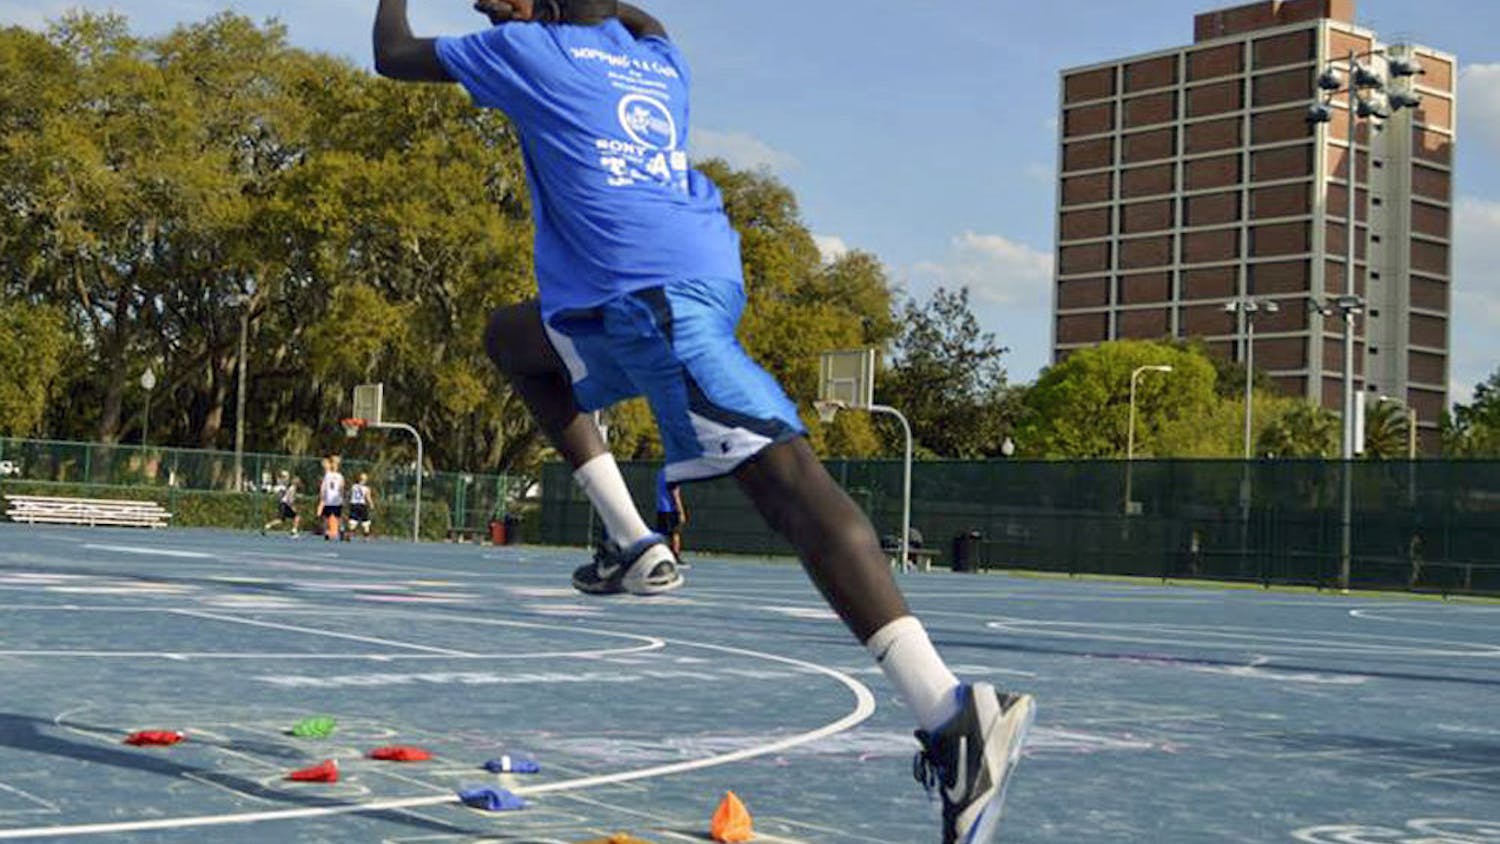 Bunduki “Duke” Ramadan, a 22-year-old UF economics senior, leaps in the air on one of the Broward Outdoor Recreation Complex basketball courts.